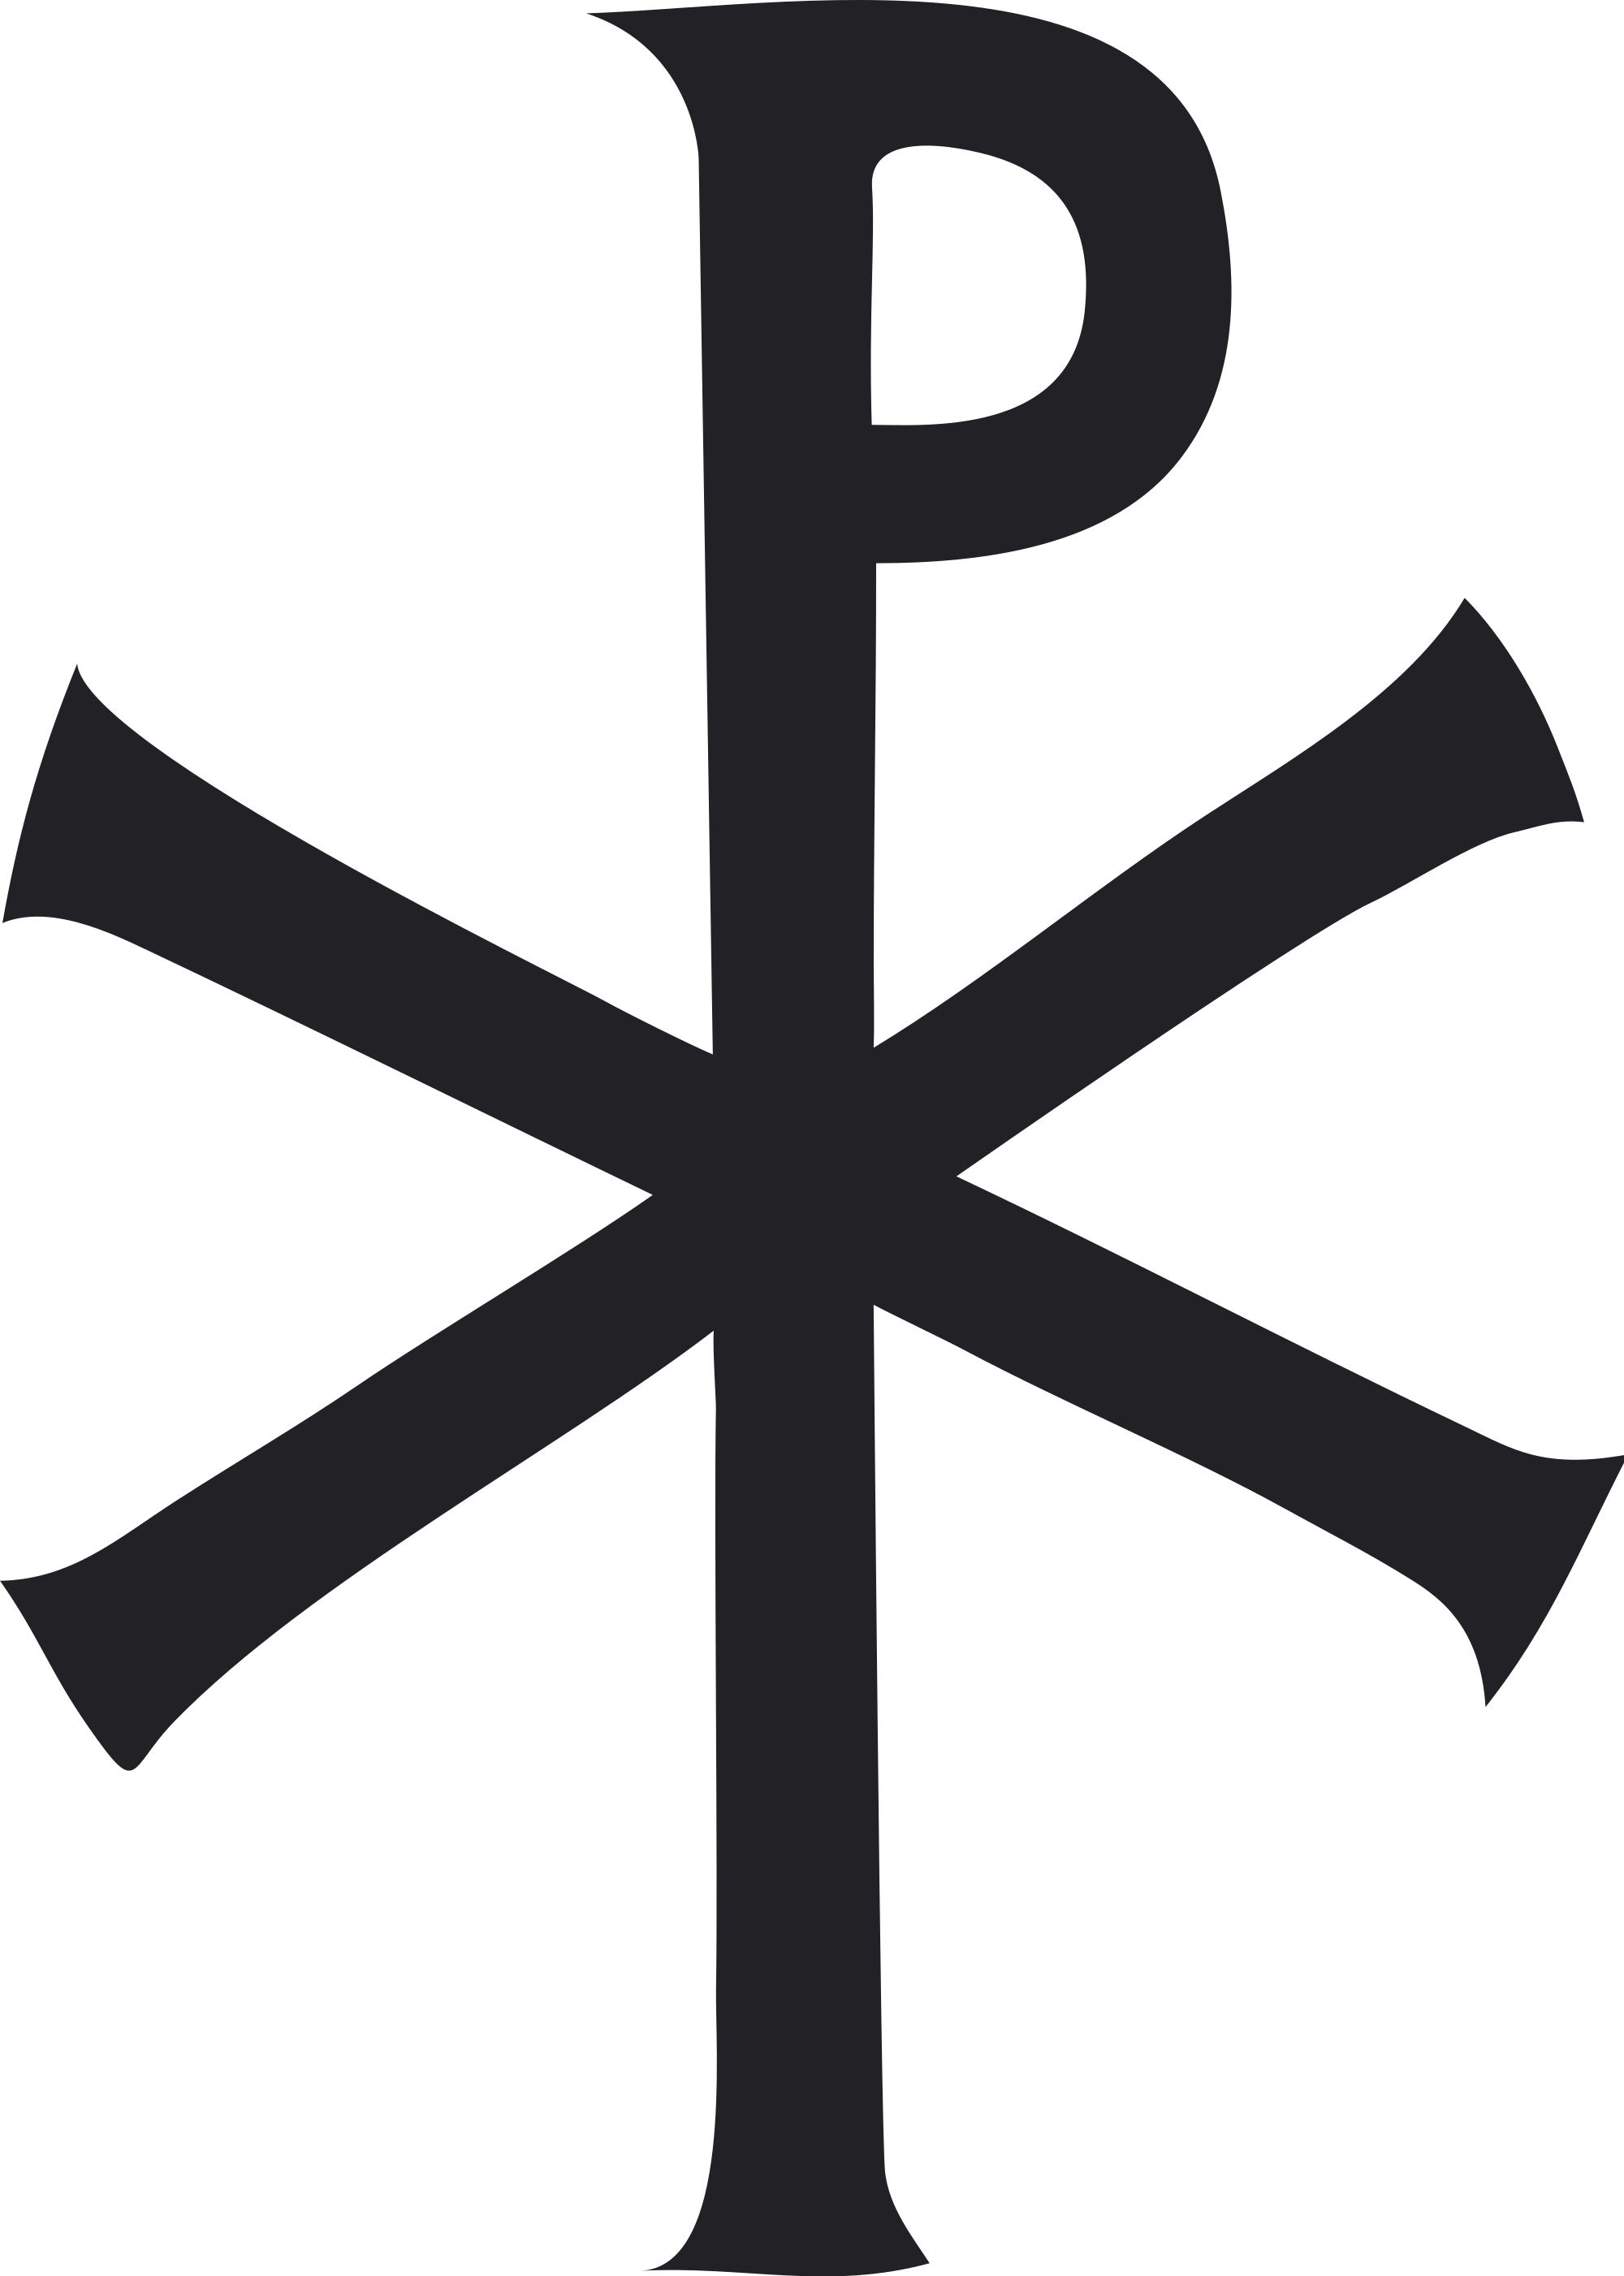 Christogram wikipedia. Crucifix clipart contemporary cross